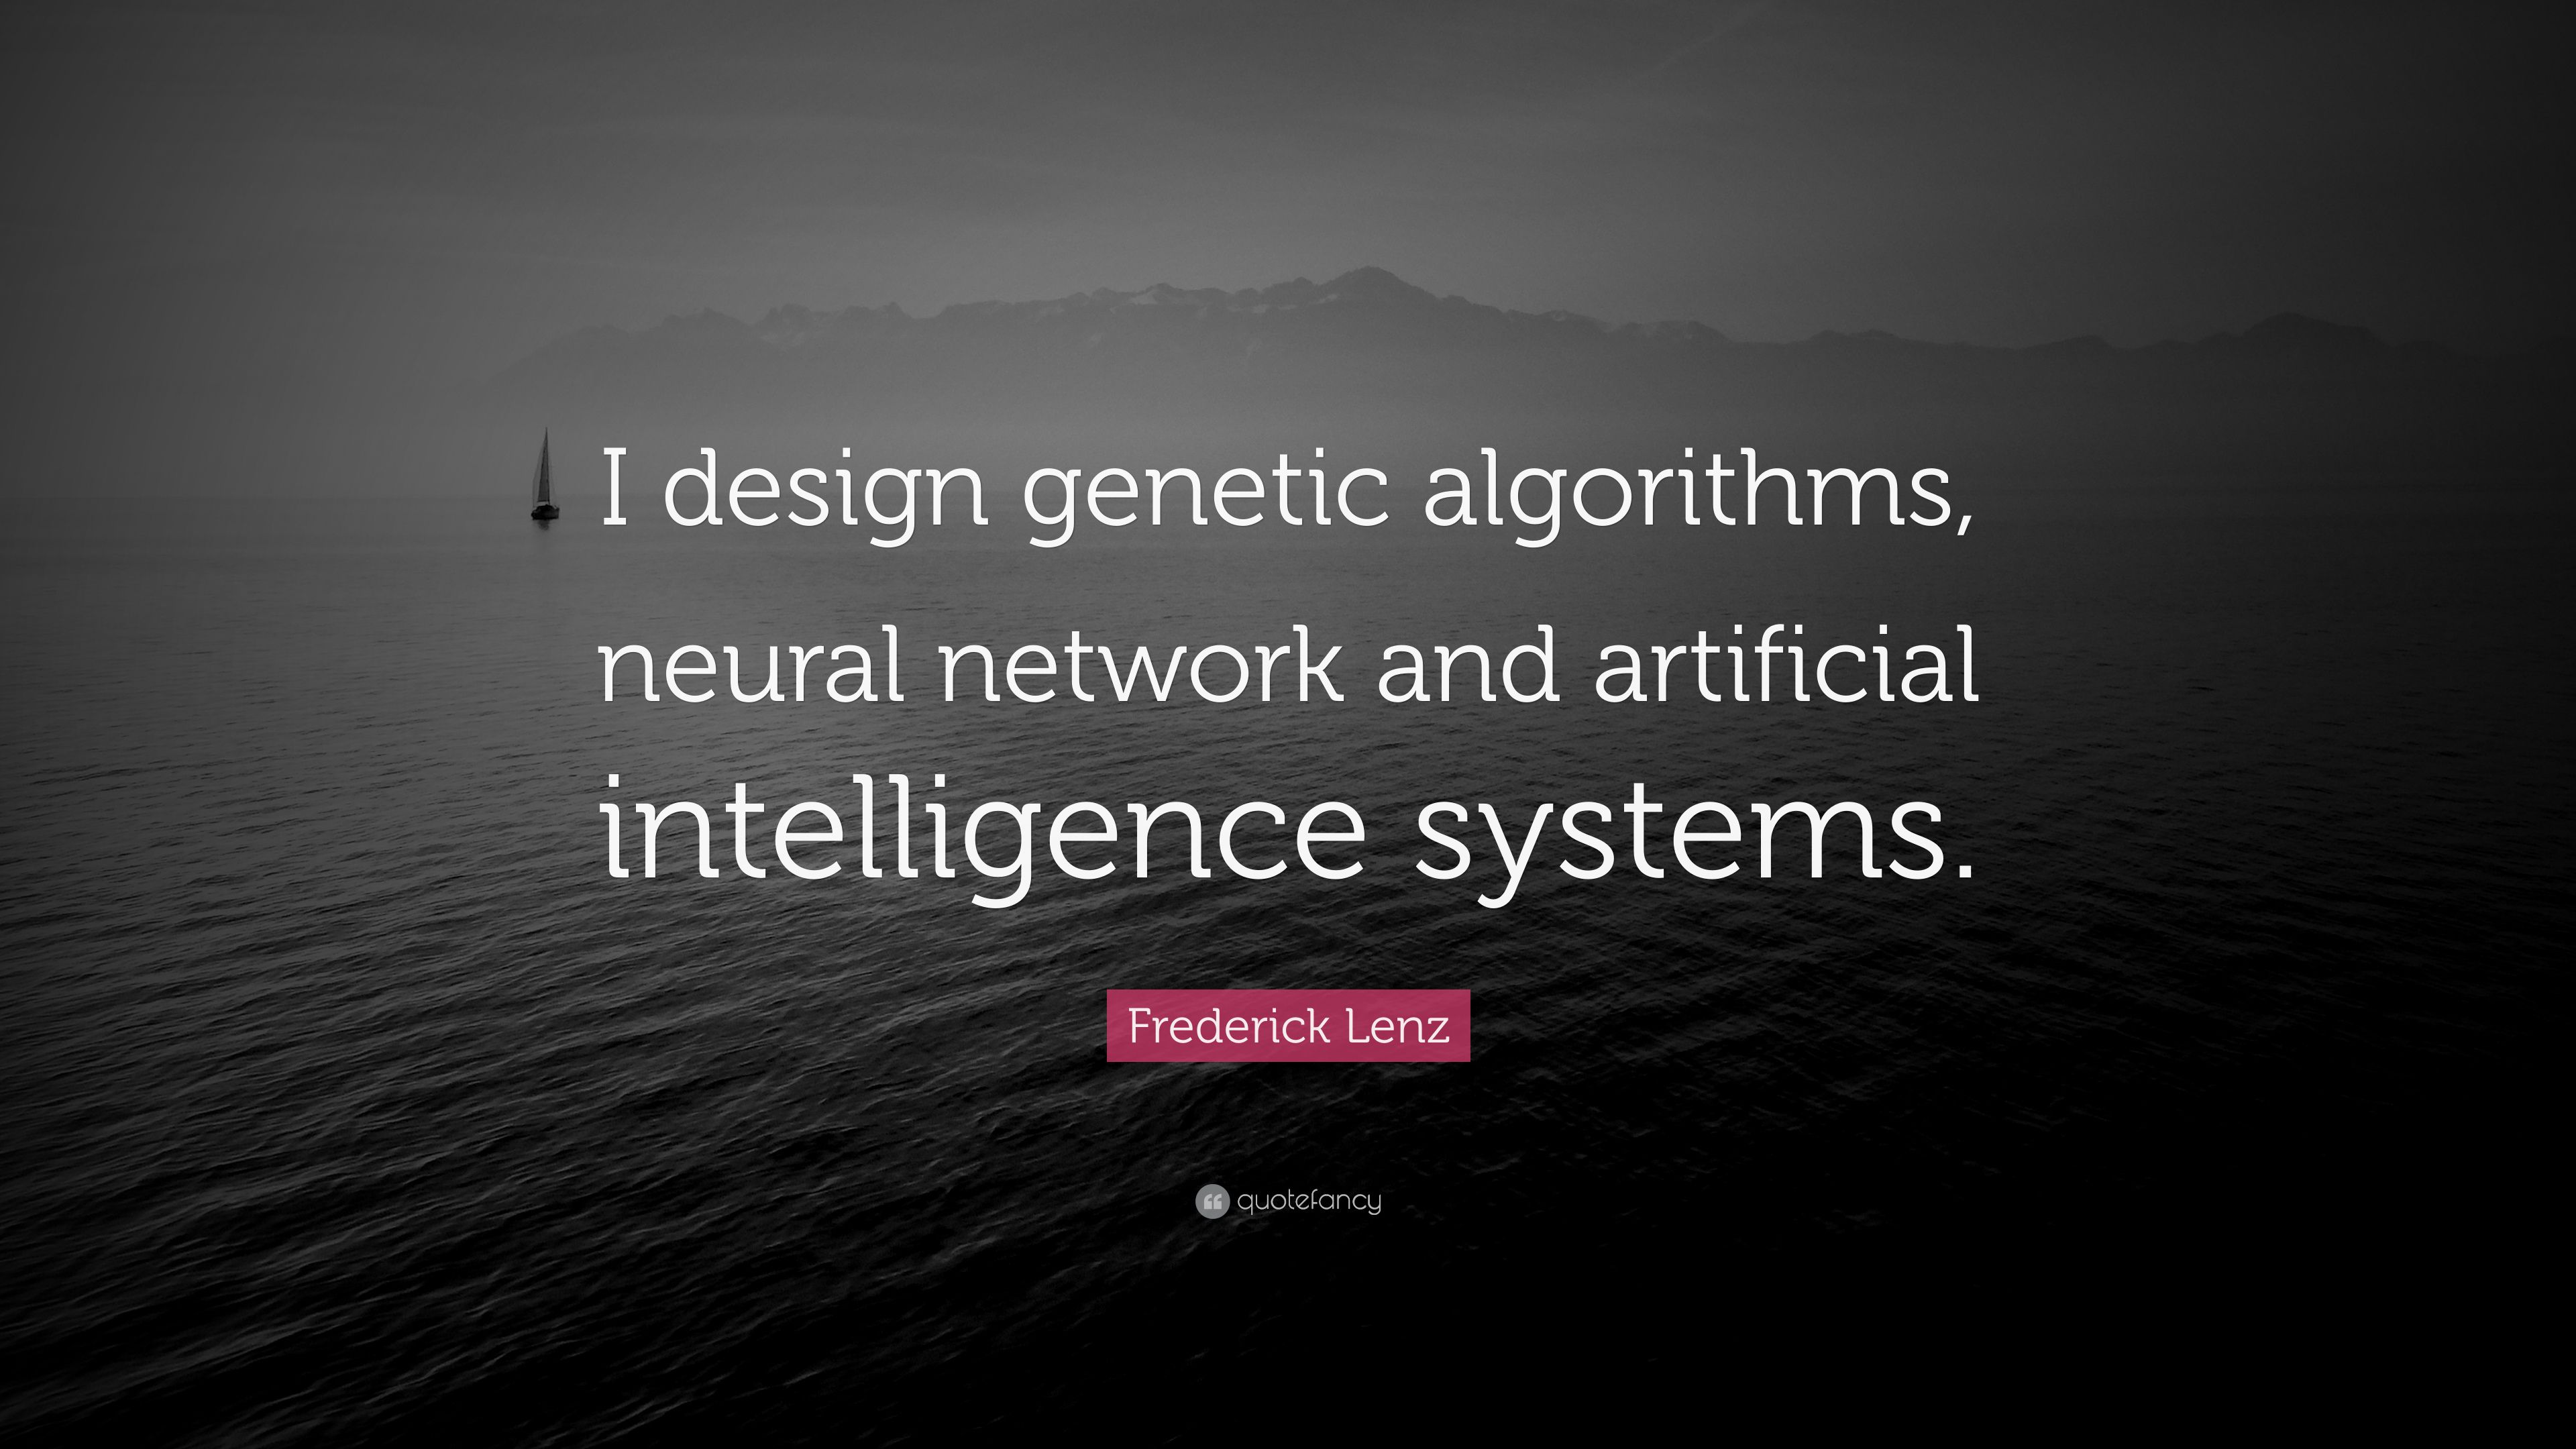 Frederick Lenz Quote: “I design genetic algorithms, neural network